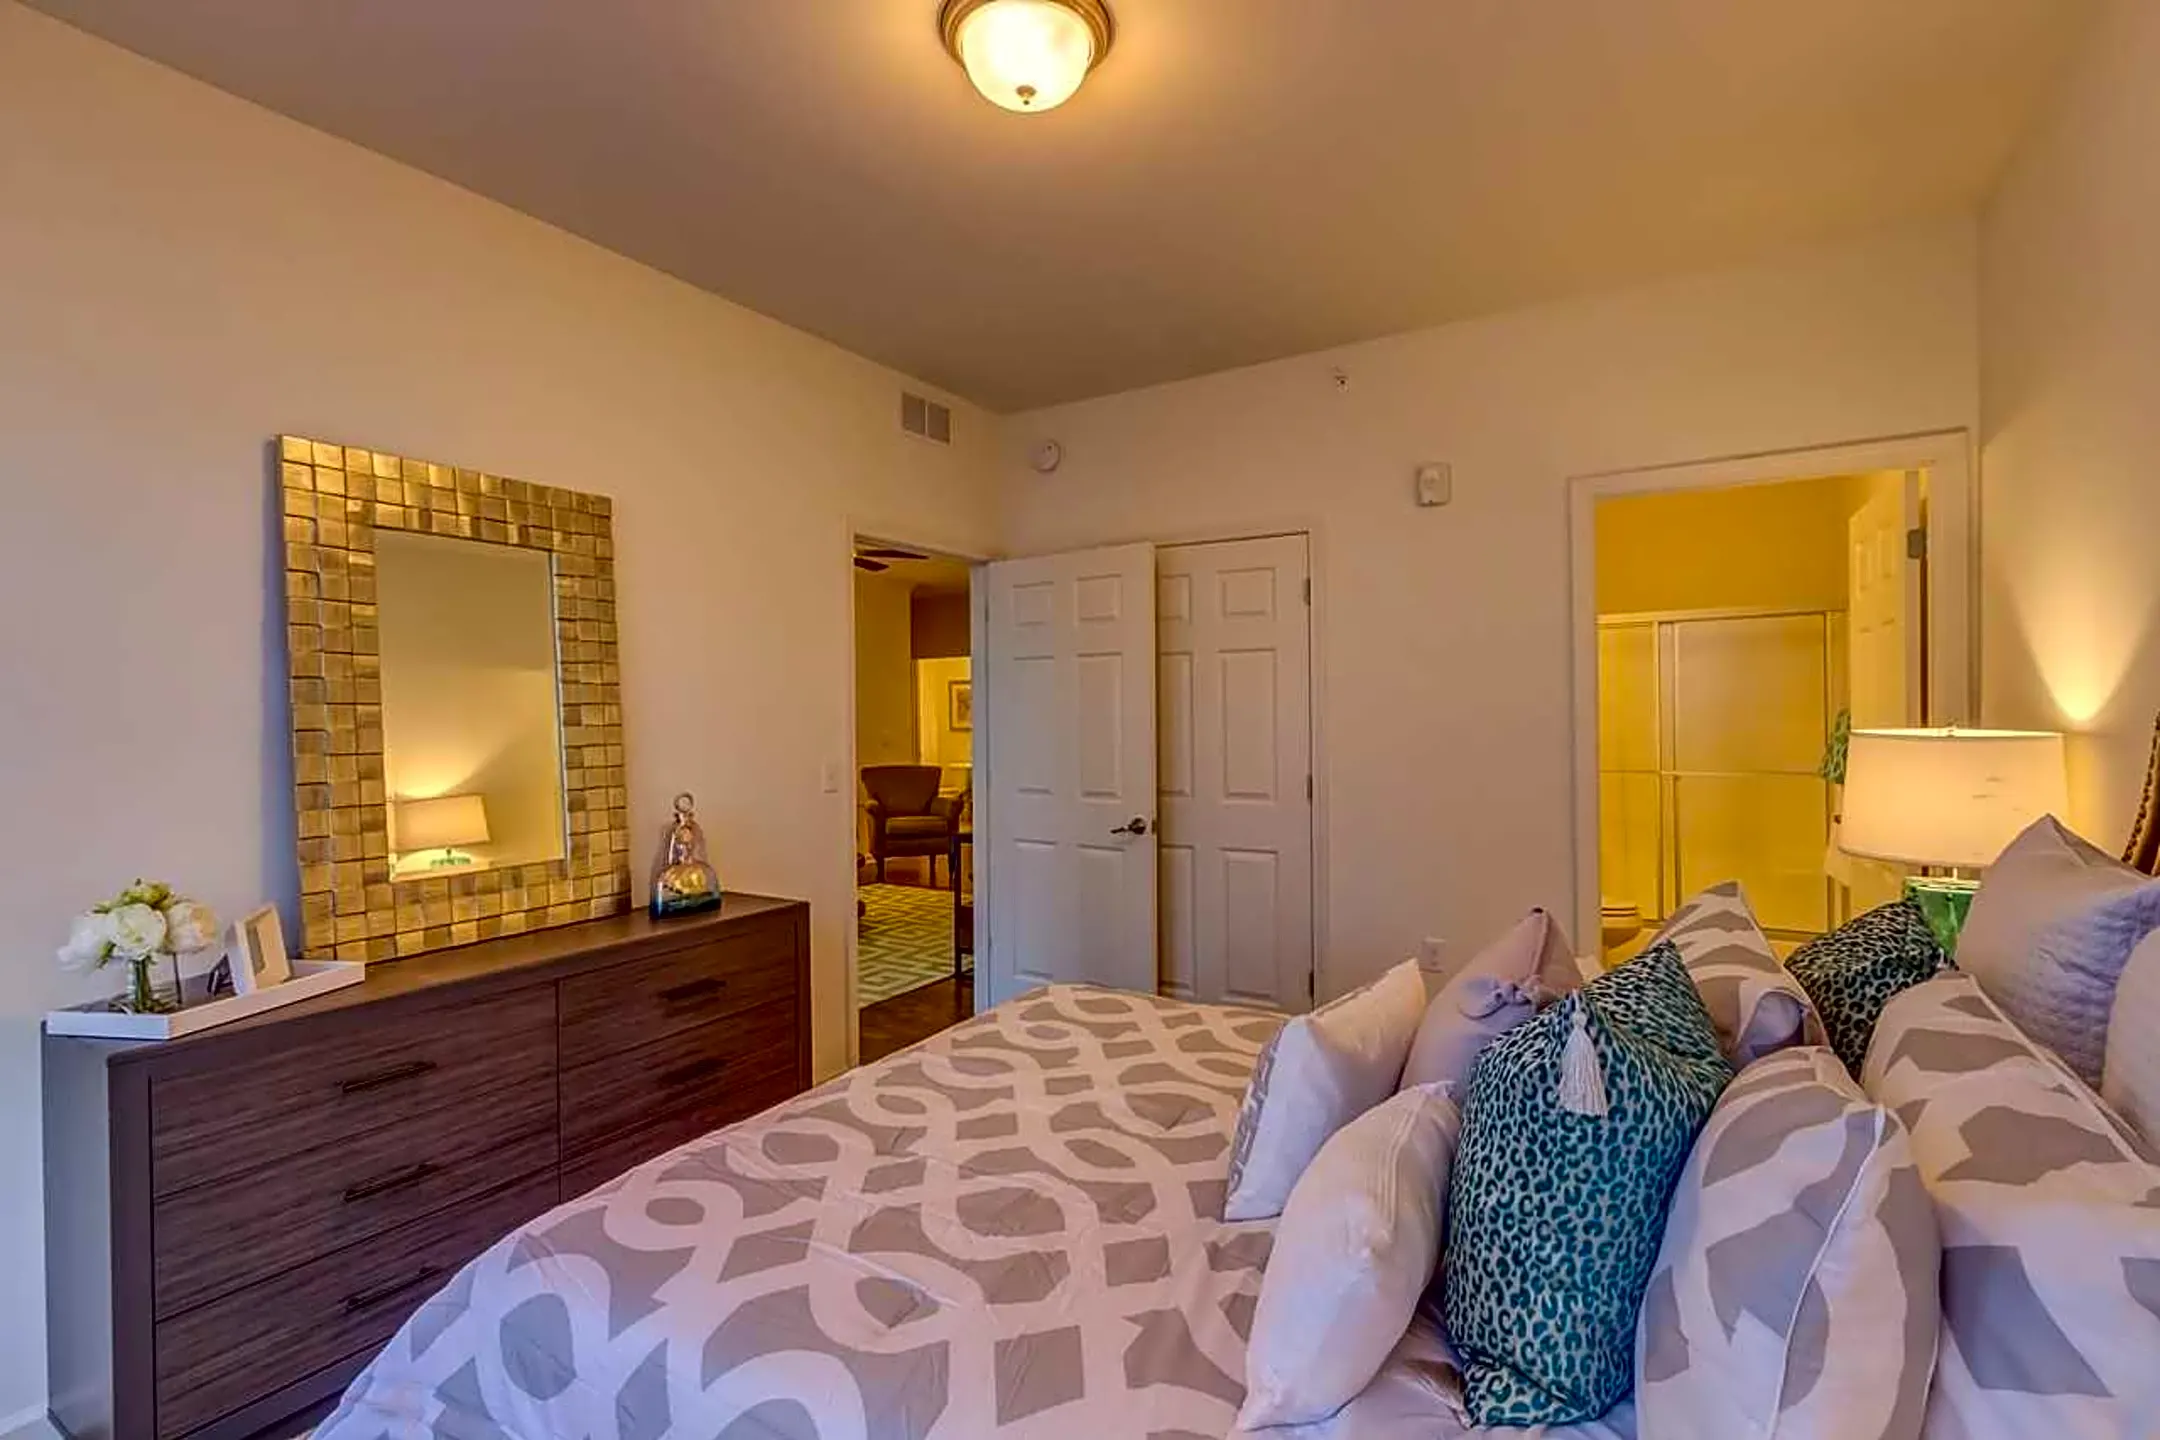 Bedroom - The BLVD at Hays - Lexington, KY